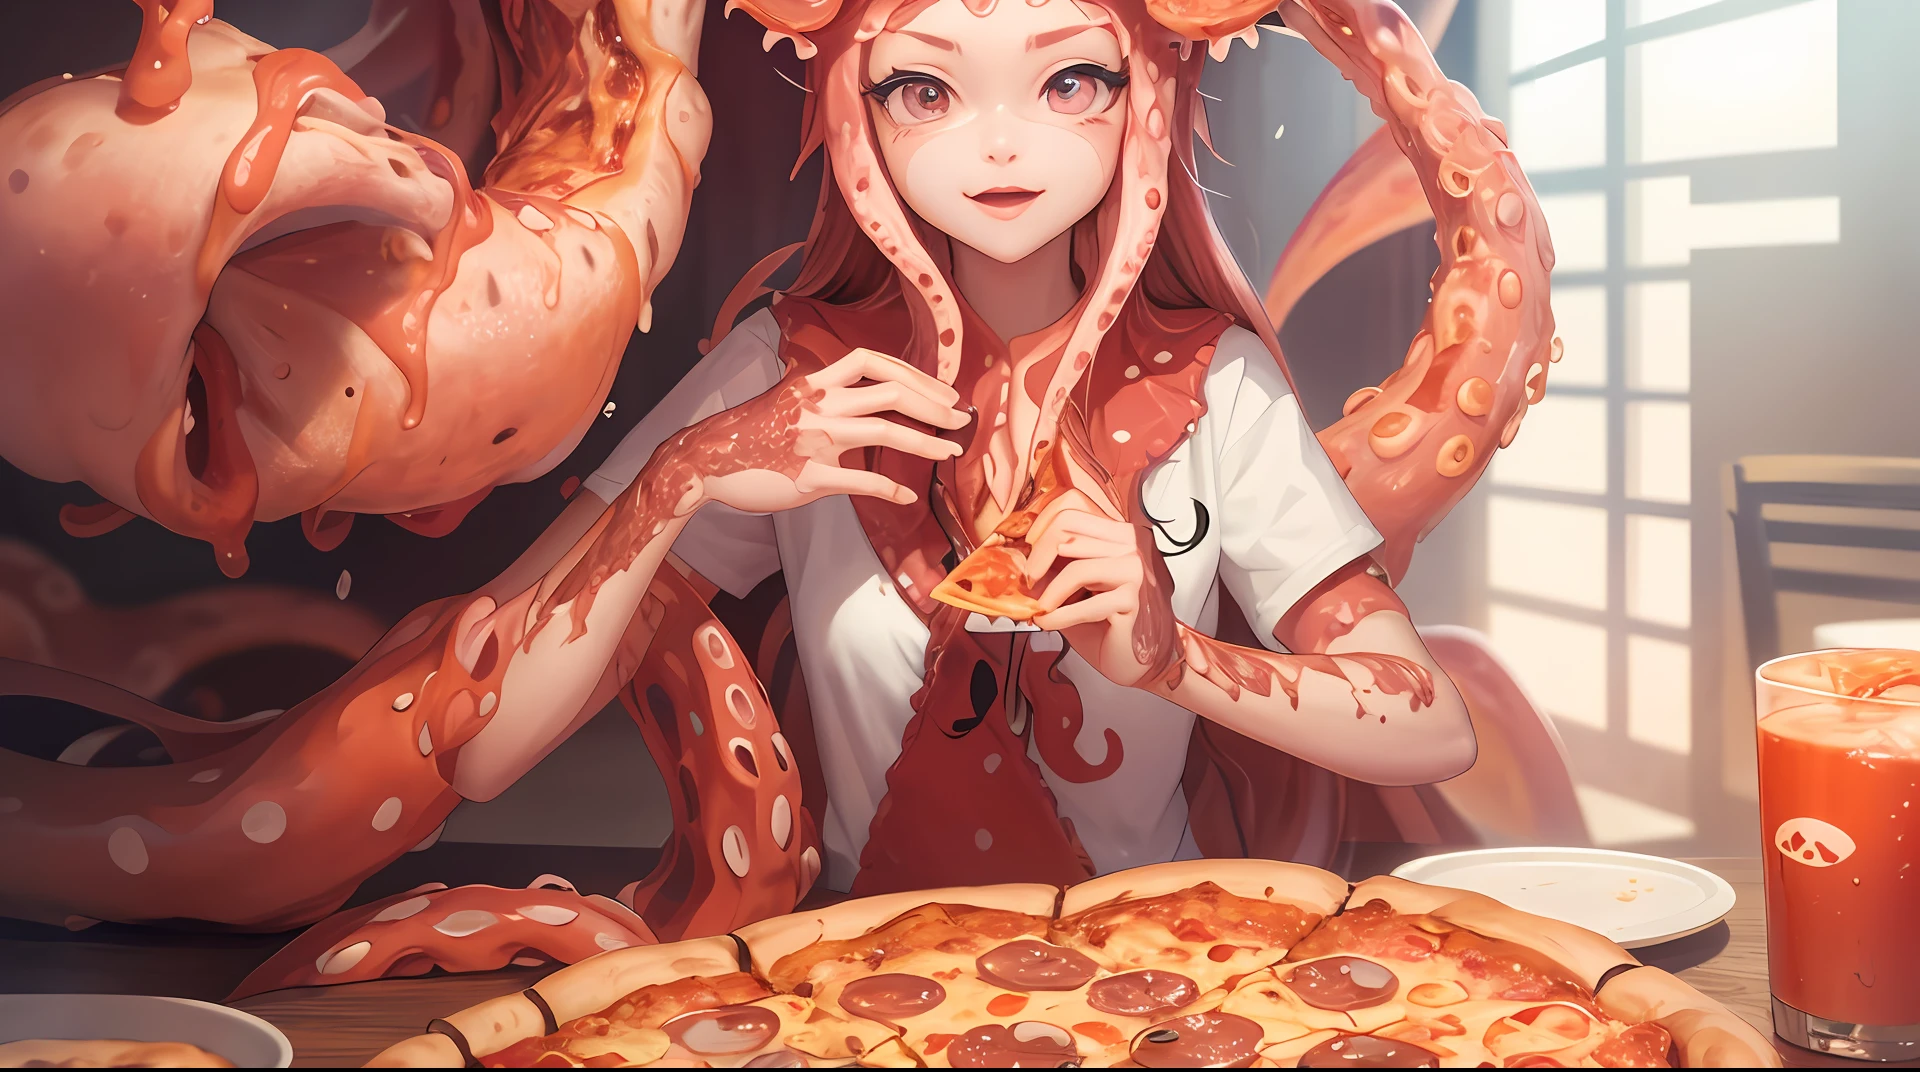 最好的品质，披萨，触手恐怖，there is a woman sitting at a table with a 比萨 and octopus tentacles, munching 比萨, eating 比萨, 触手缠绕汉堡, 比萨!, 触手周围, presenting 比萨, 人形粉色雌性鱿鱼女孩, eating a 比萨, 动漫食物, 详细的数字动漫艺术, 比萨, 令人惊叹的食物插图, sharing a 比萨, 一些触手触碰着她